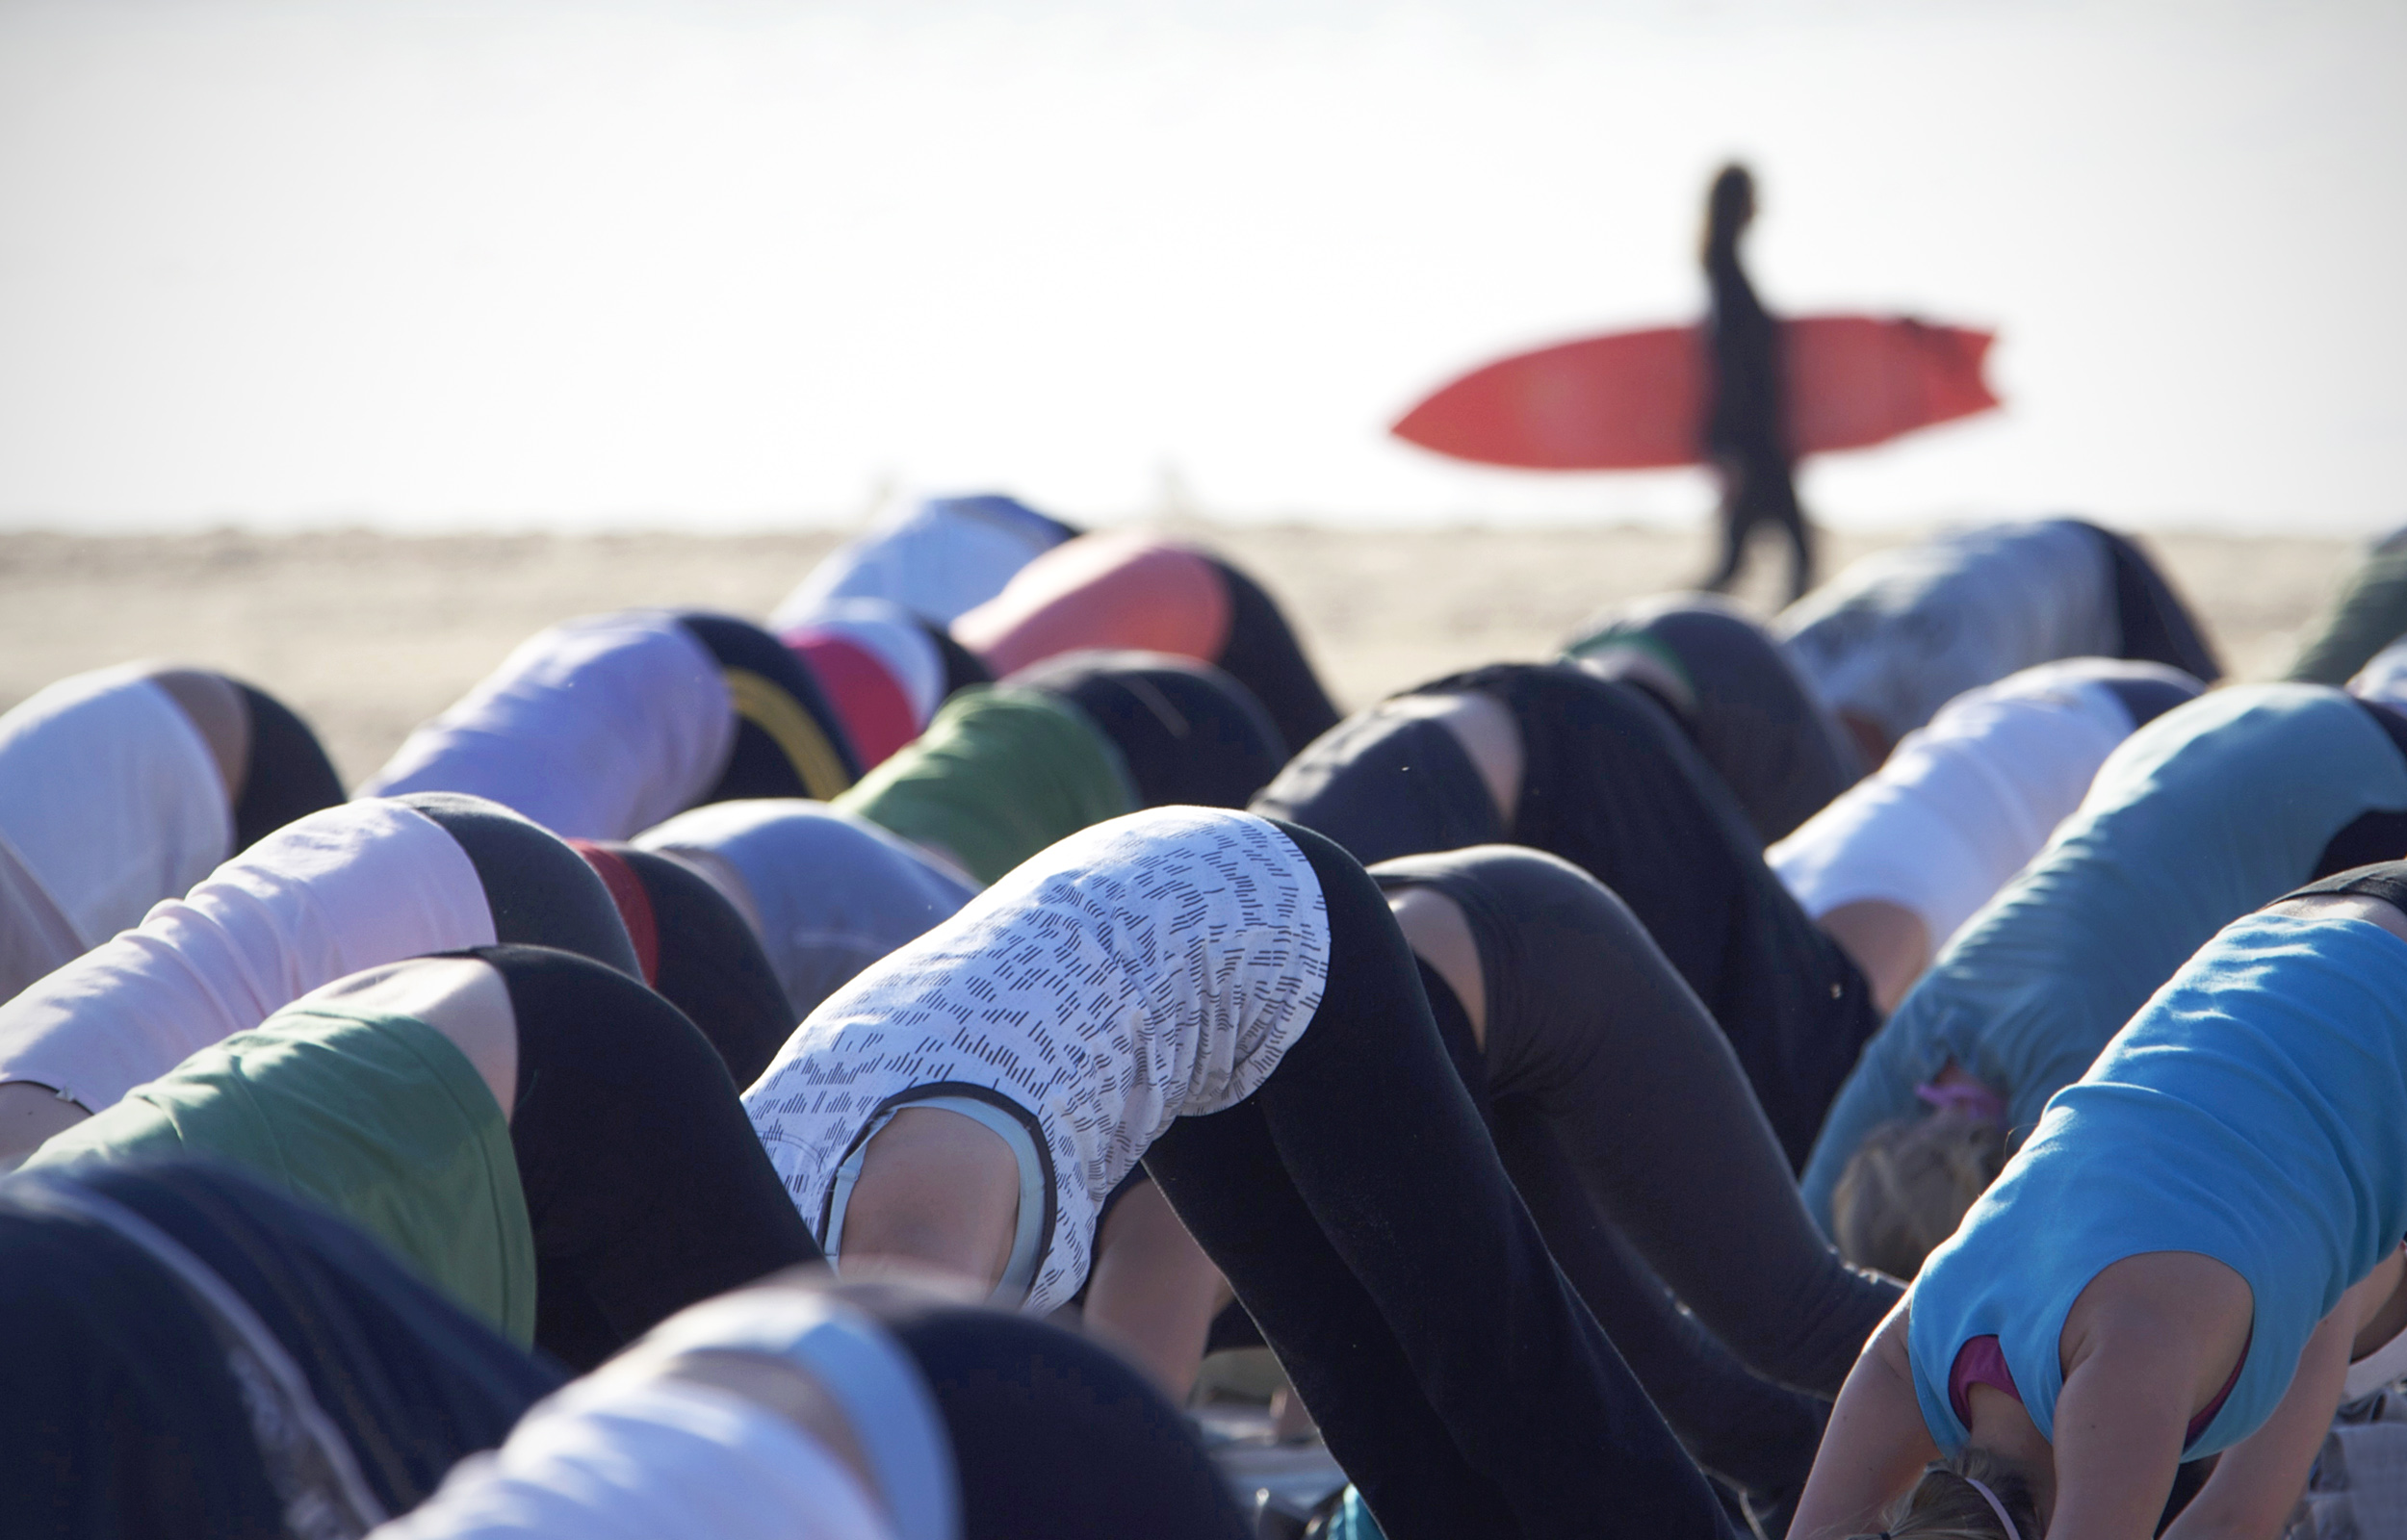 Group of ladies doing downward dog yoga pose on the beach, surfer in background, Bondi Beach, Sydney